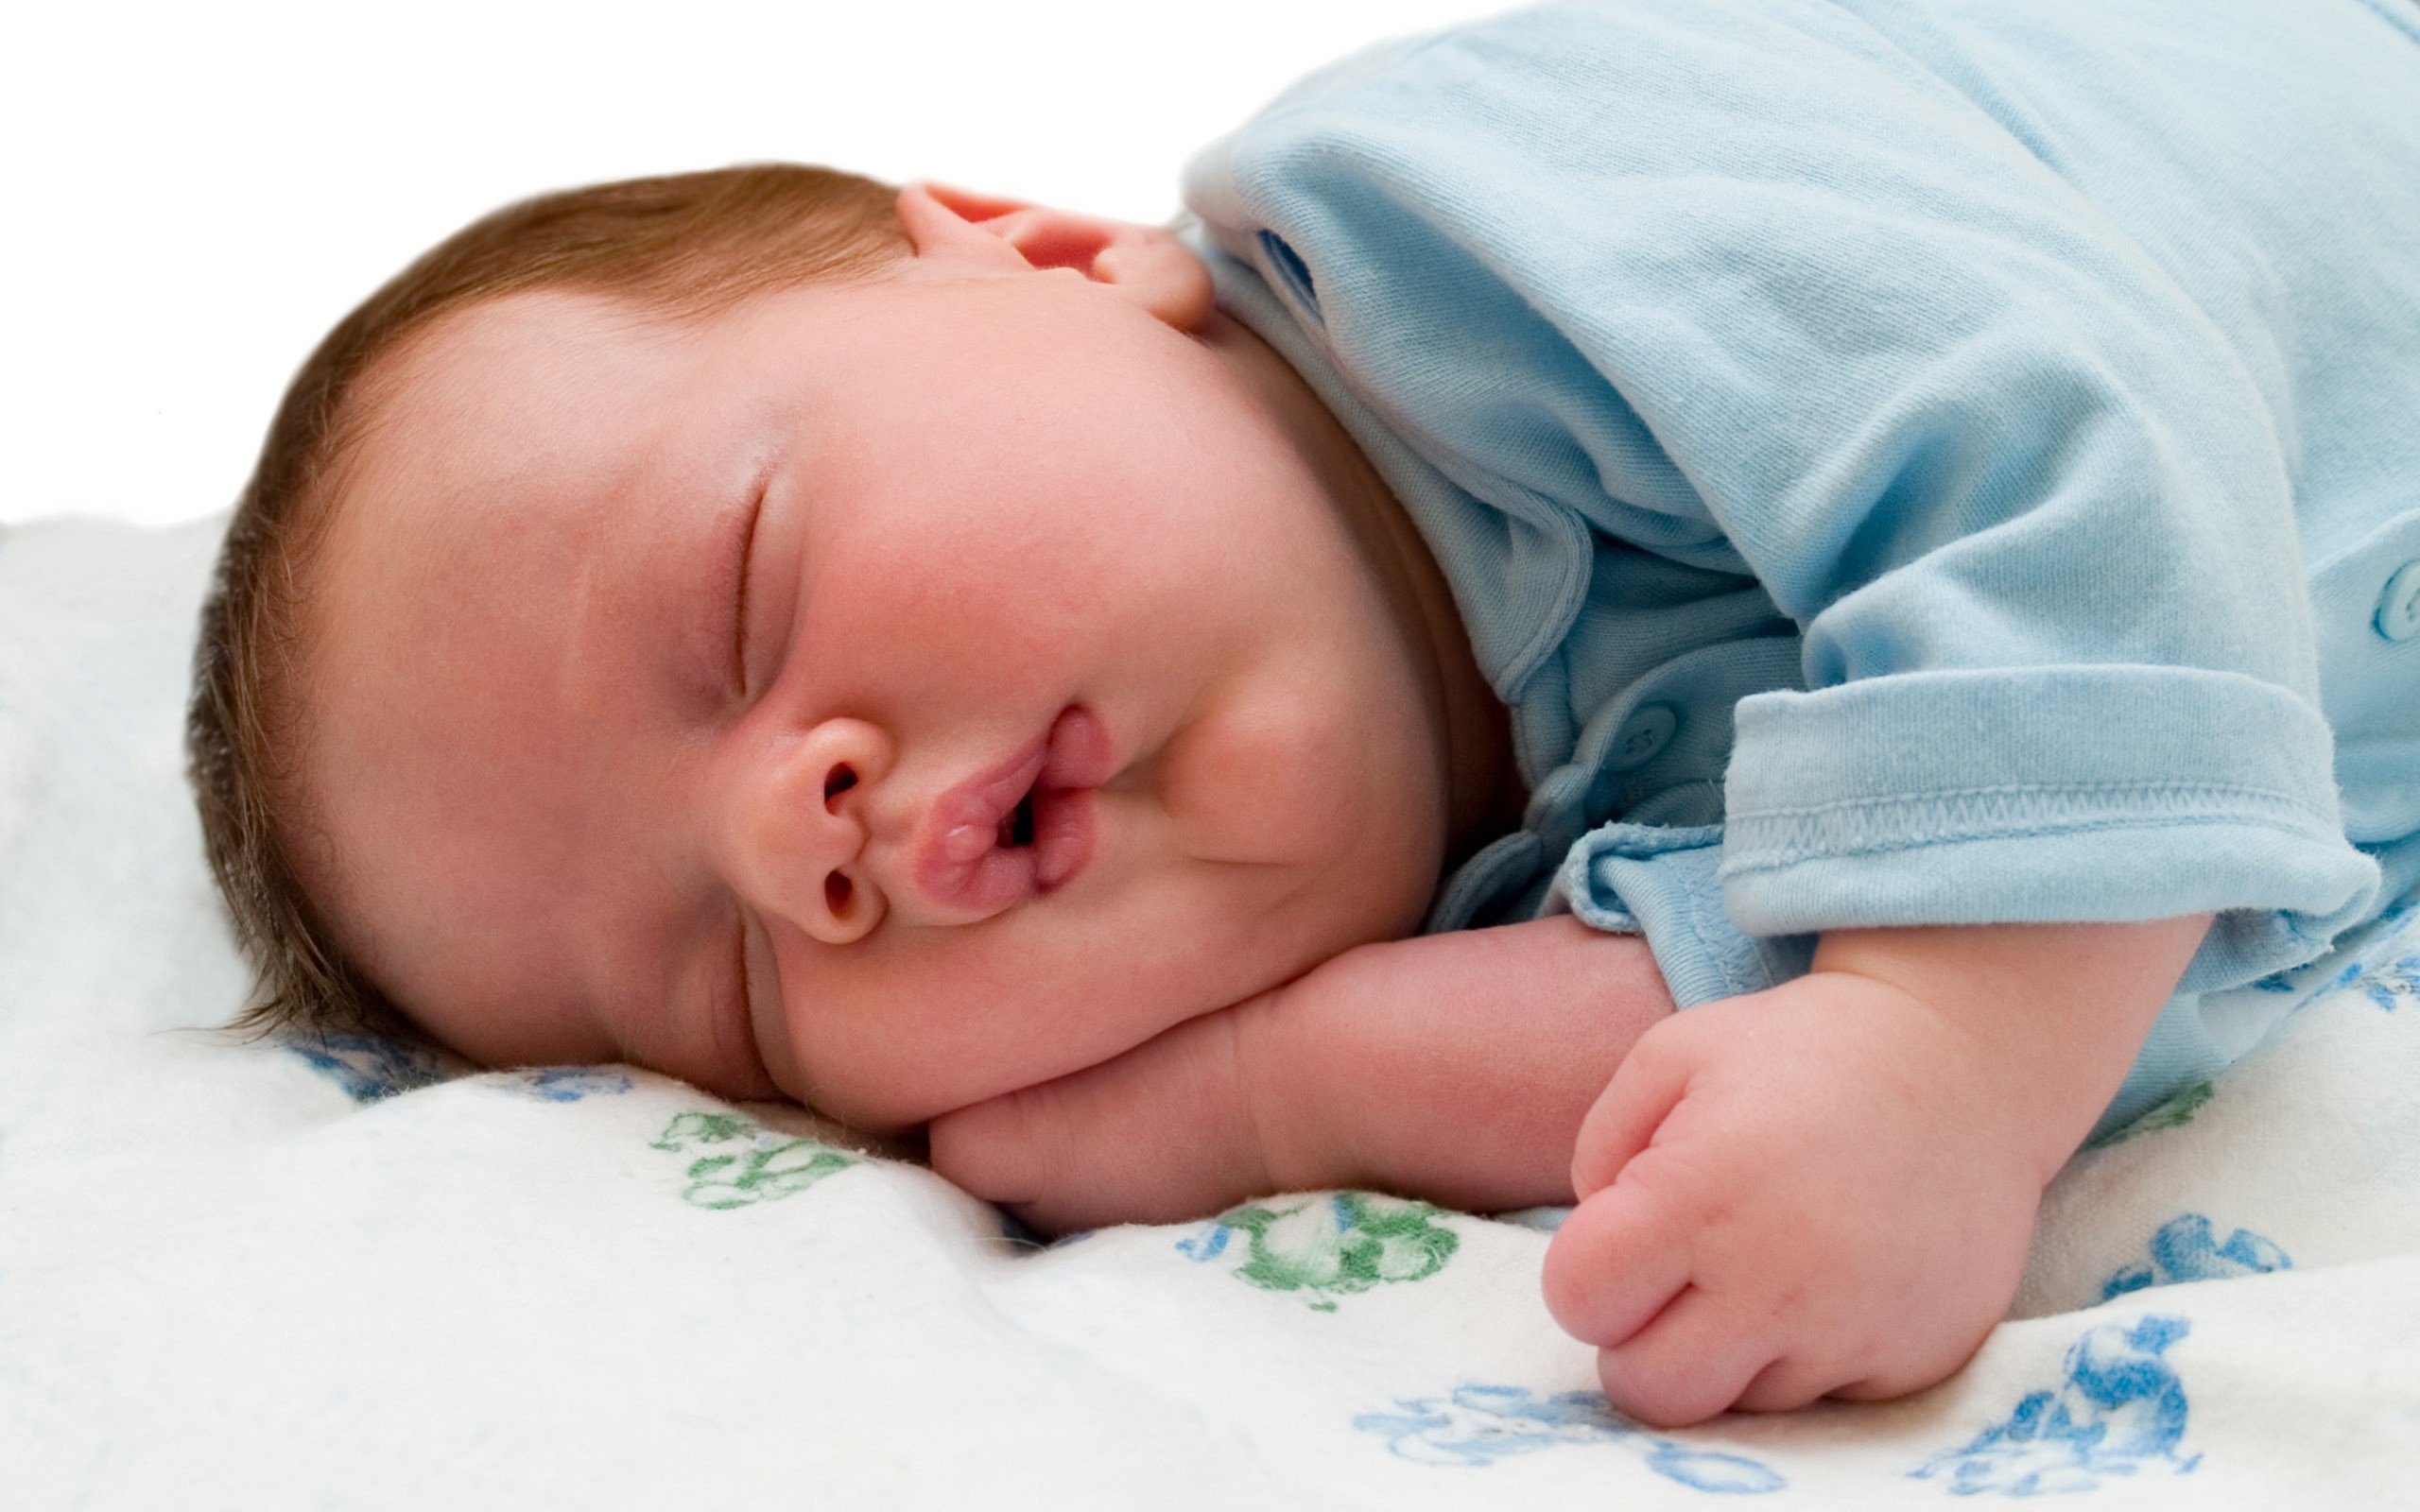 sleeping baby wallpaper,child,baby,skin,sleep,nose